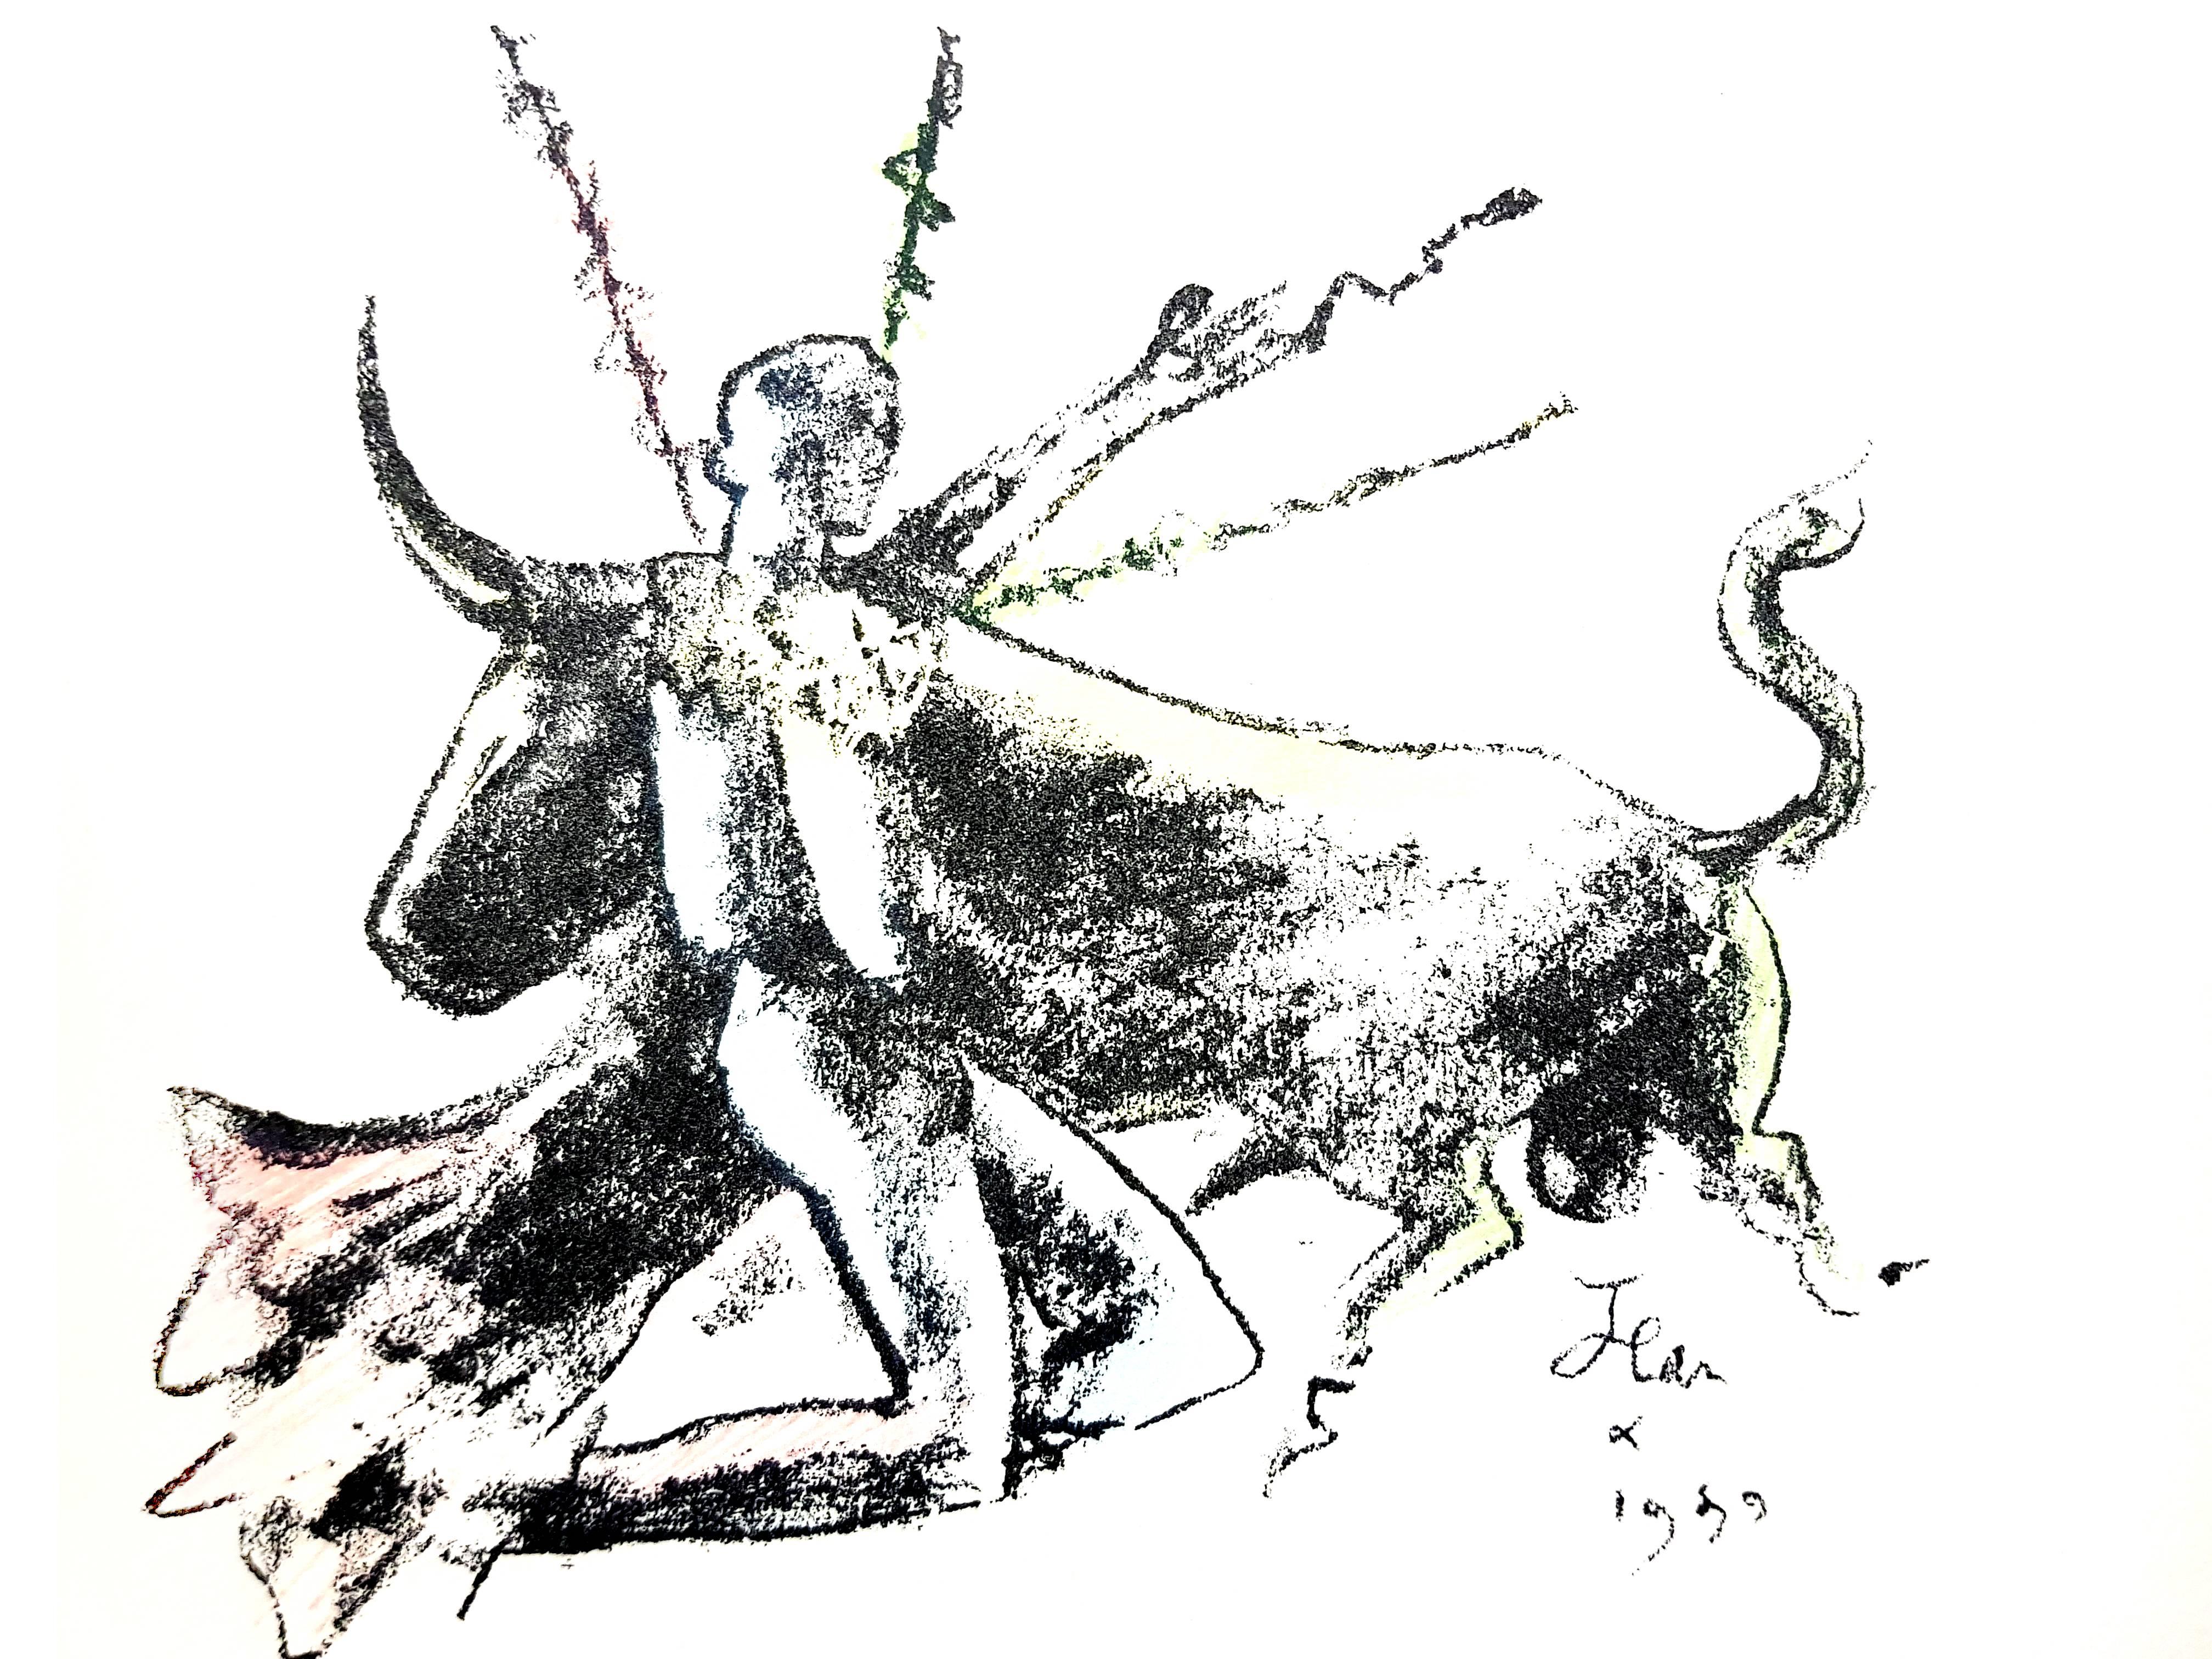 Jean Cocteau - Morlot - Original Lithograph 
1964
Dimensions: 30 x 20 cm
Edition of 200 (one of the 200 on Vélin de Rives)
Mourlot Press, 1964

Jean Cocteau

Writer, artist and film director Jean Cocteau was one of the most influential creative